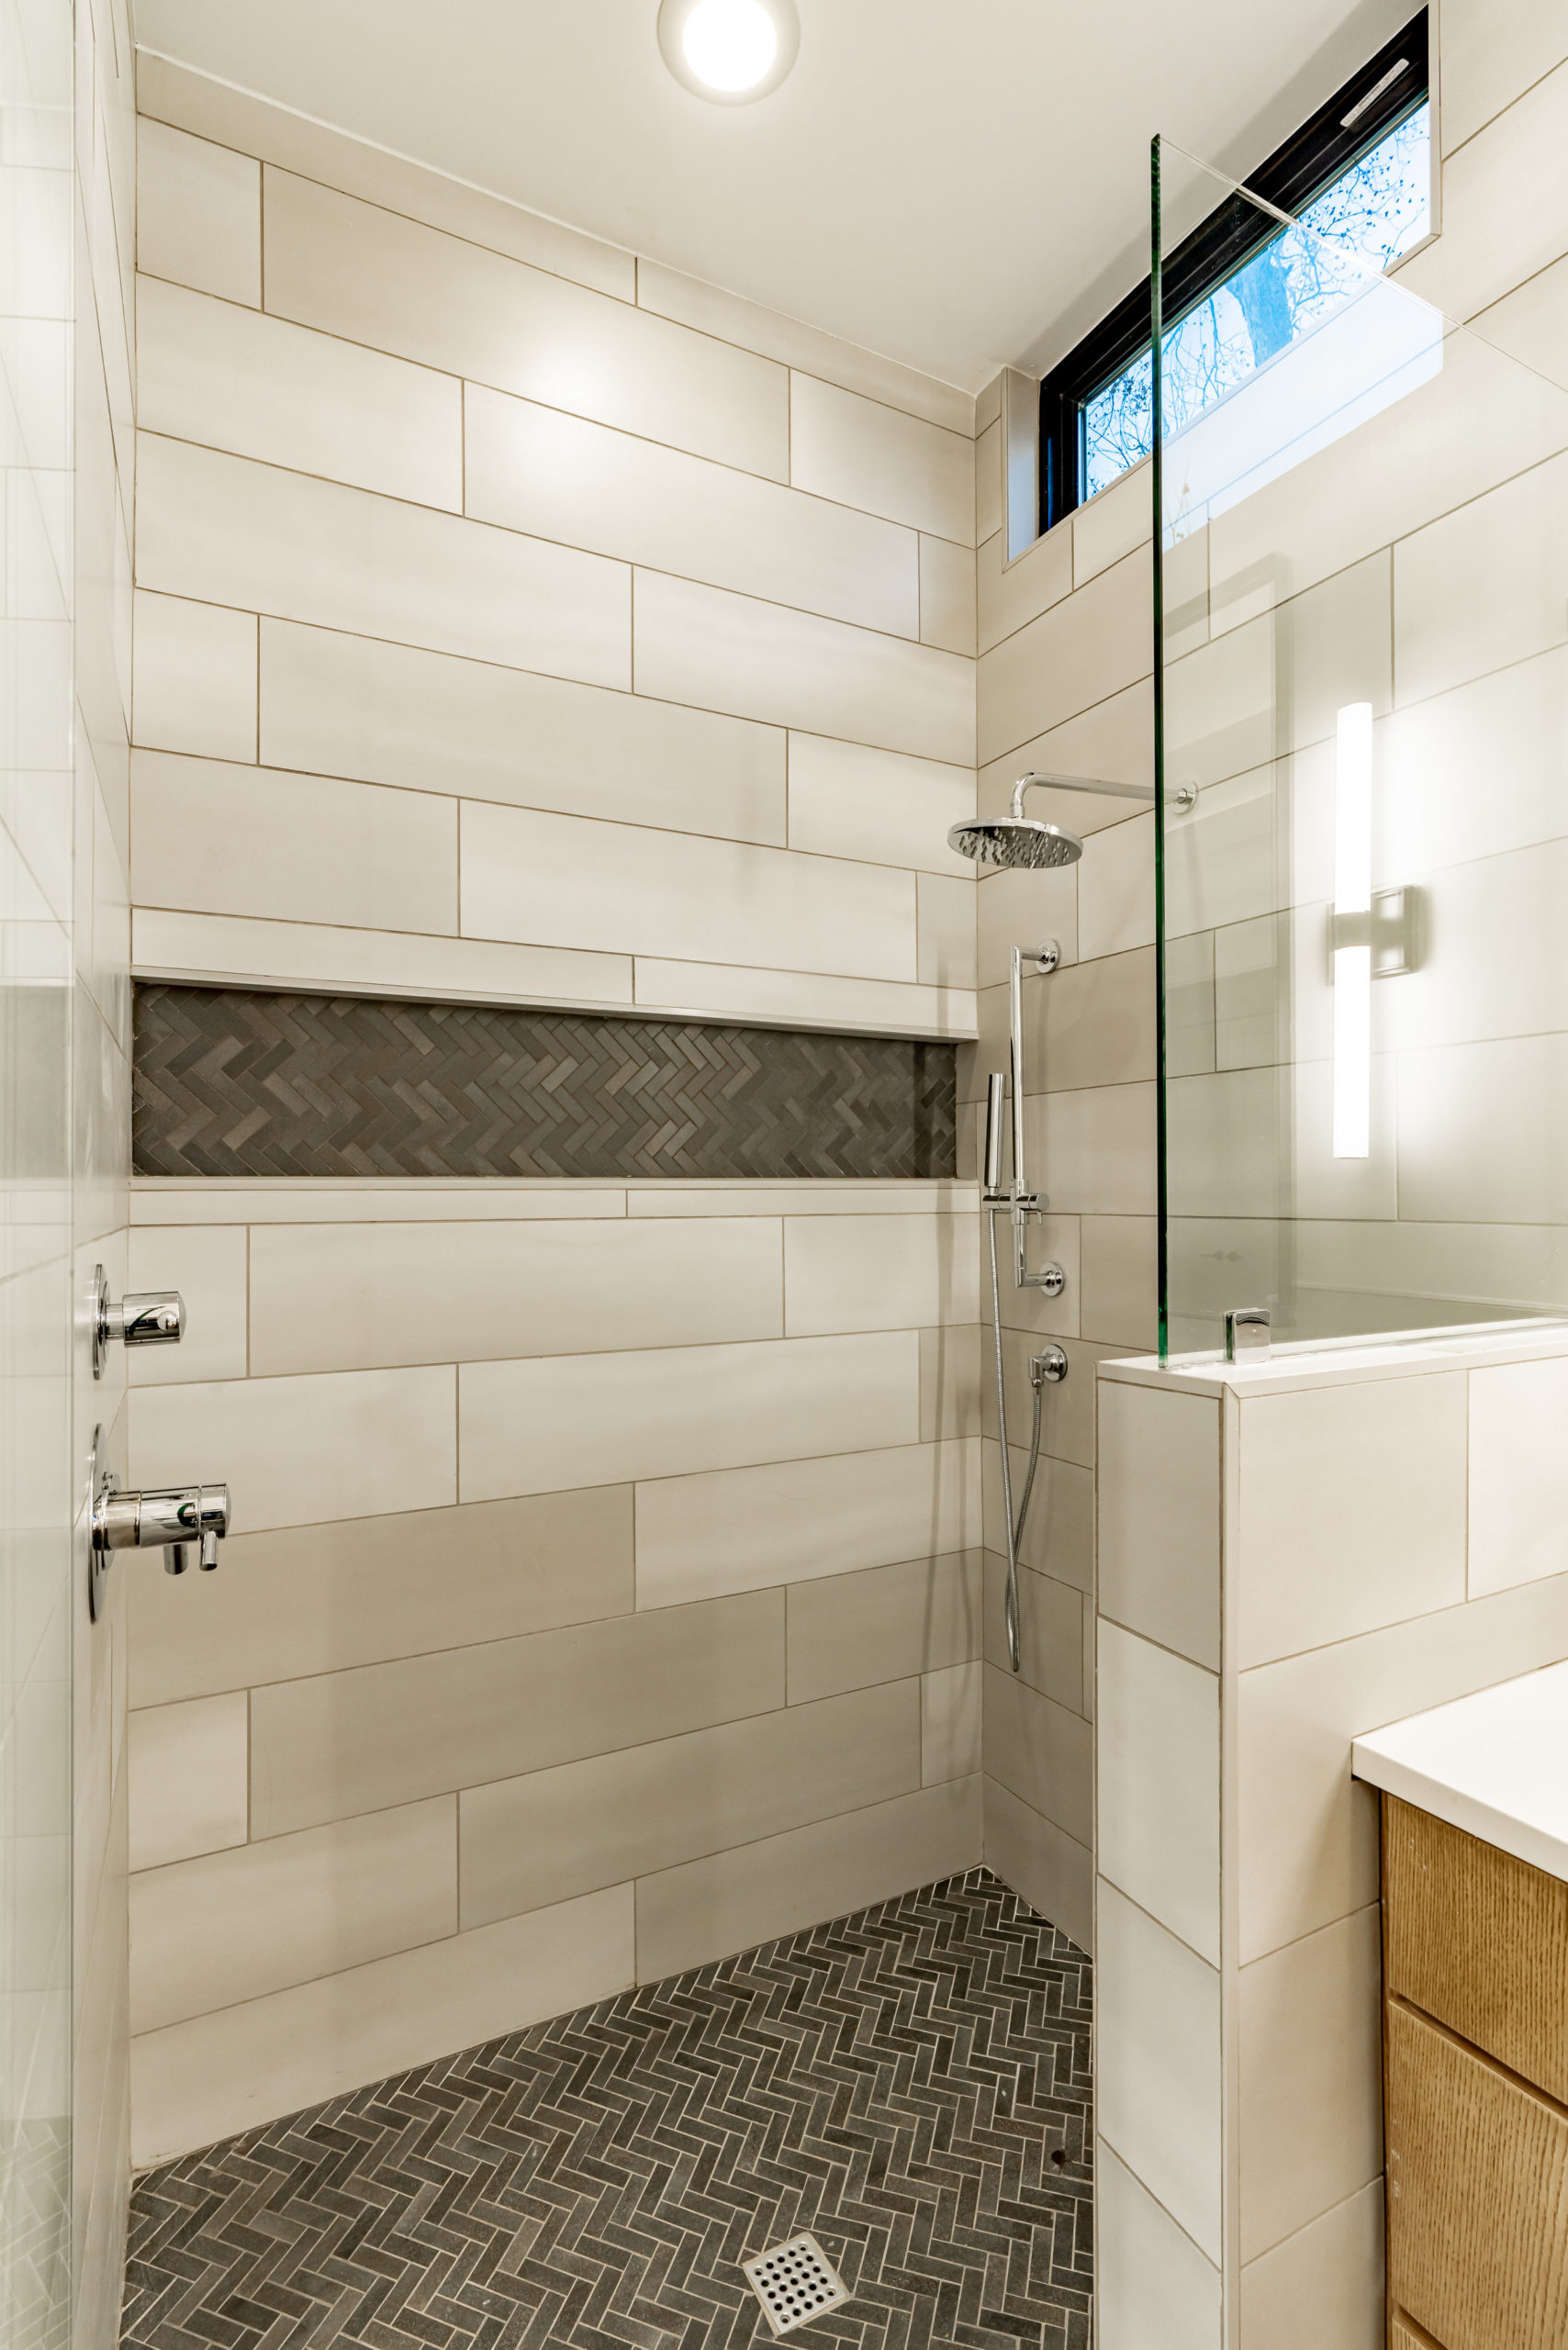 Woodview custom custom tile shower in the master bath